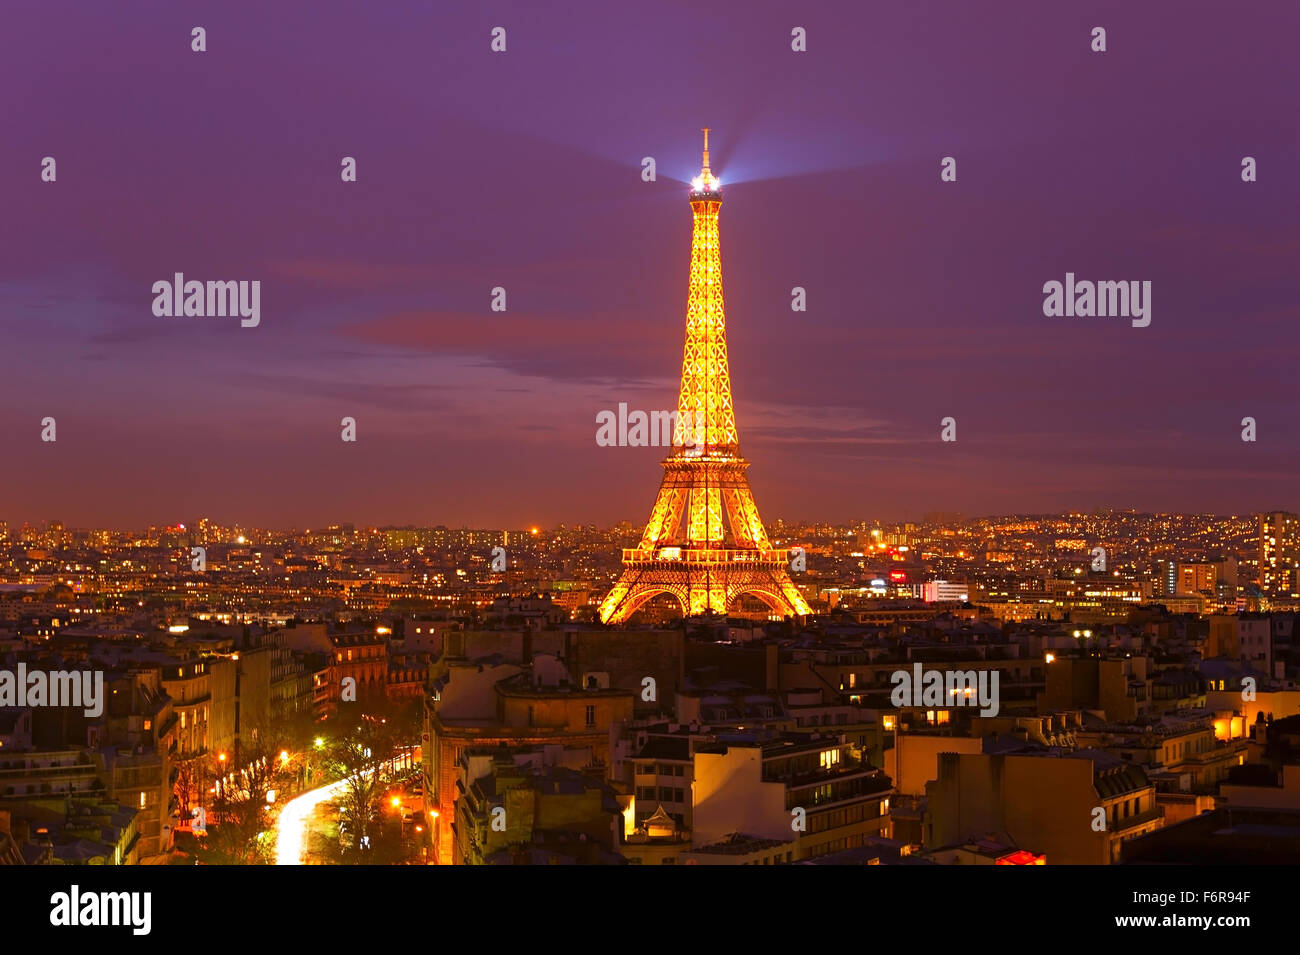 Eiffel Tower Light Performance Show at night. Stock Photo